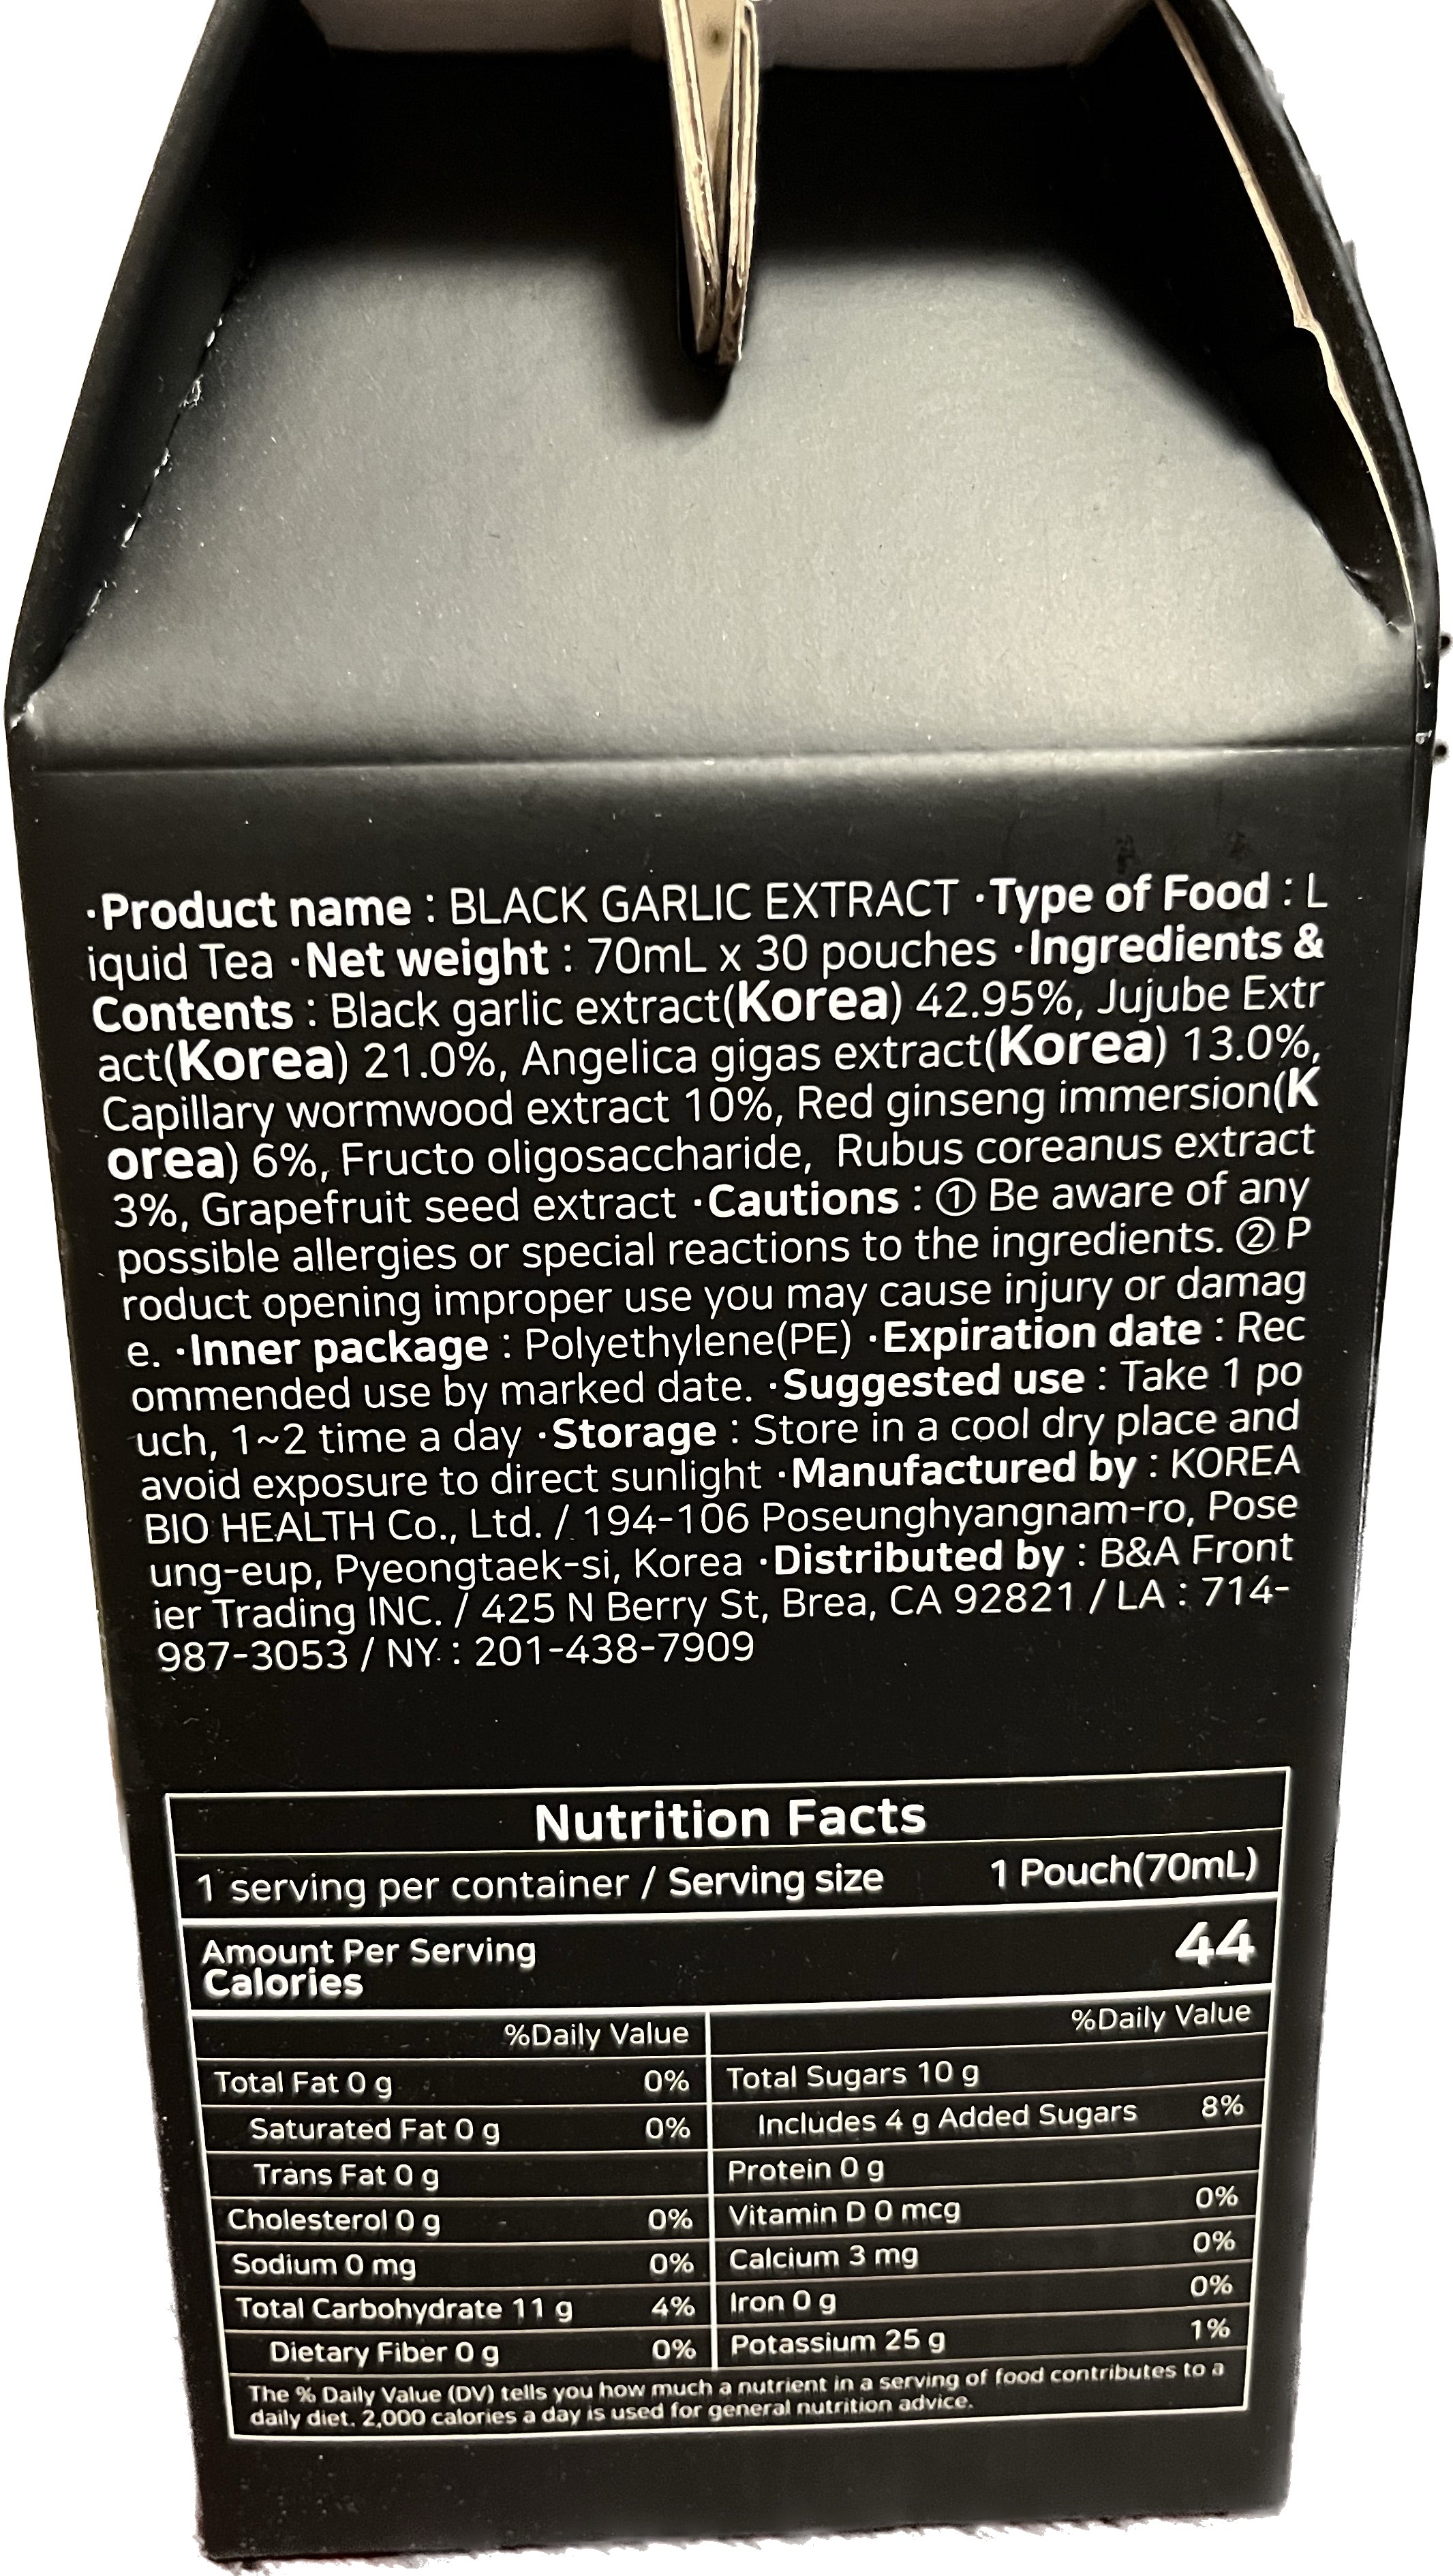 Pine Tree Brand- Black Garlic Extract 70mL x 30